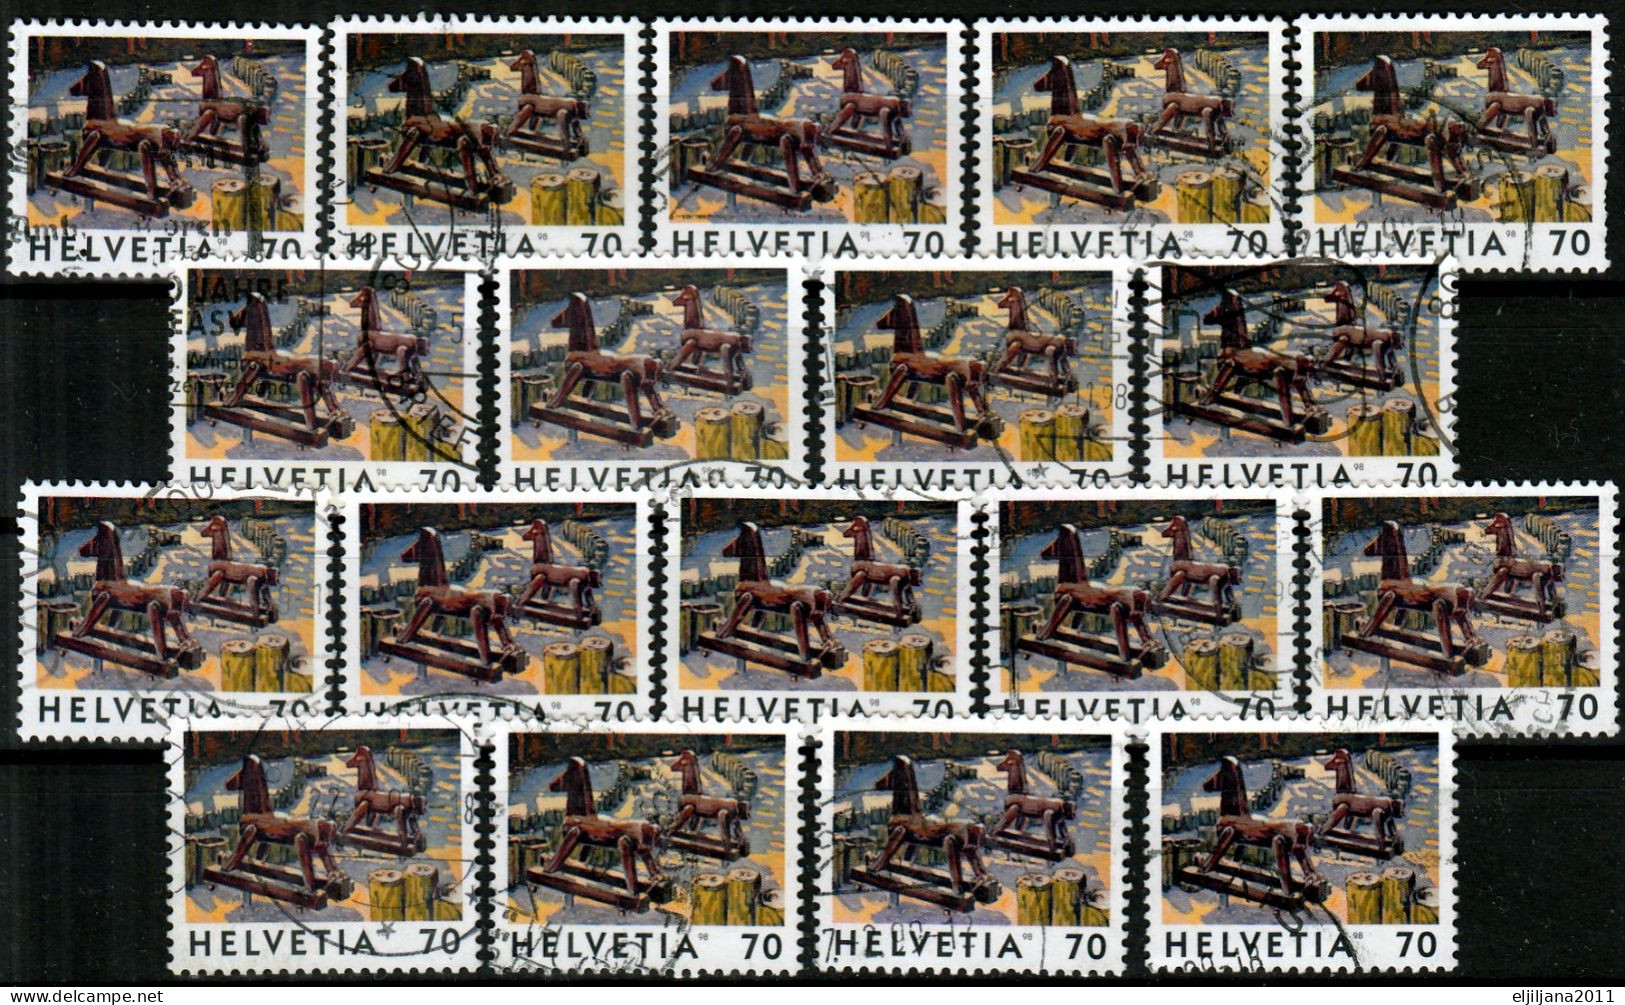 Switzerland / Helvetia / Schweiz / Suisse 1998 ⁕ Deux Chevaux Mi.1646 ⁕ 18v Used - Used Stamps